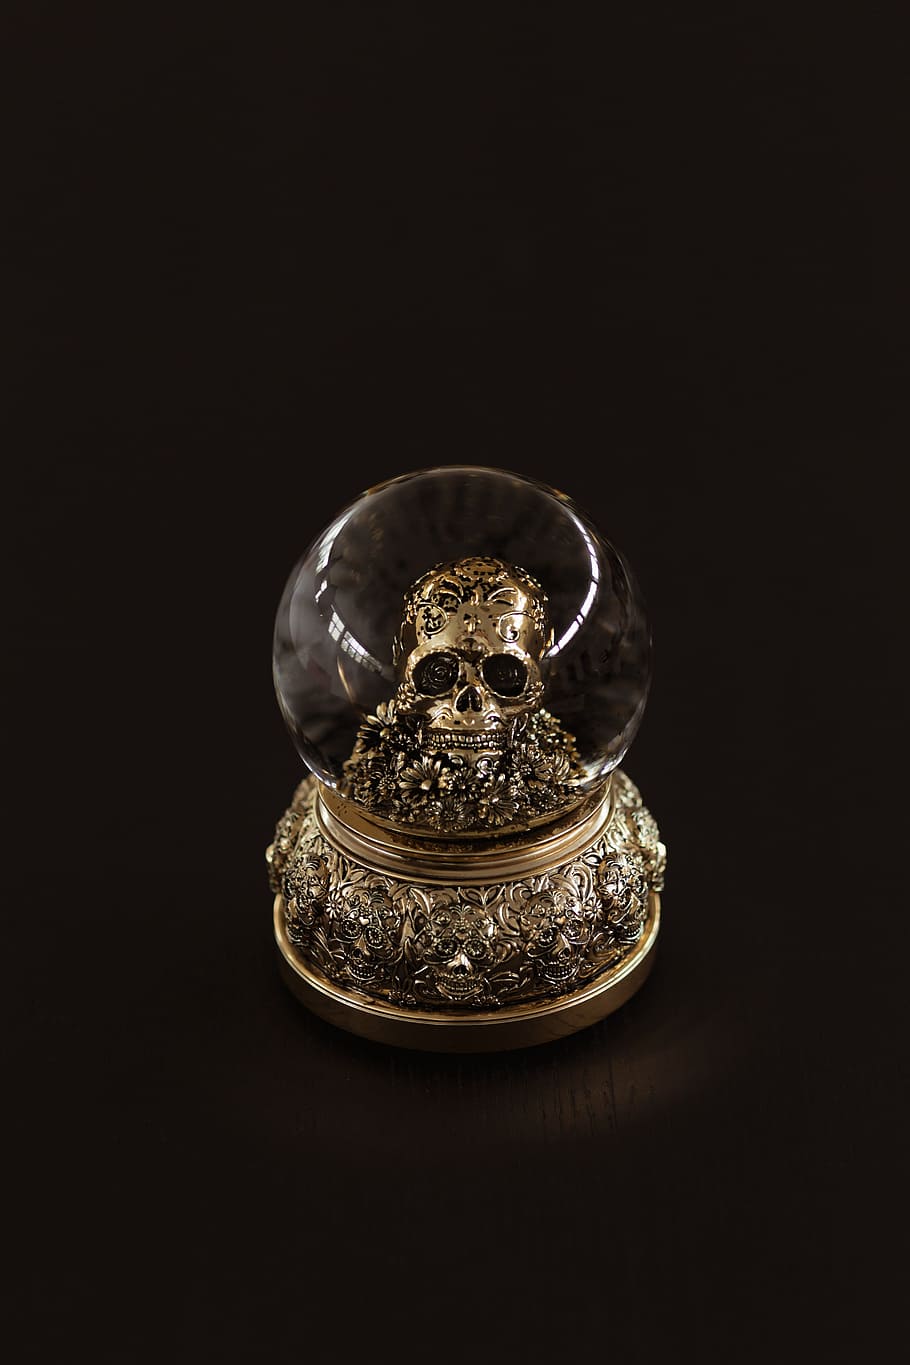 A skull snow globe, gold, golden, black, decoration, halloween